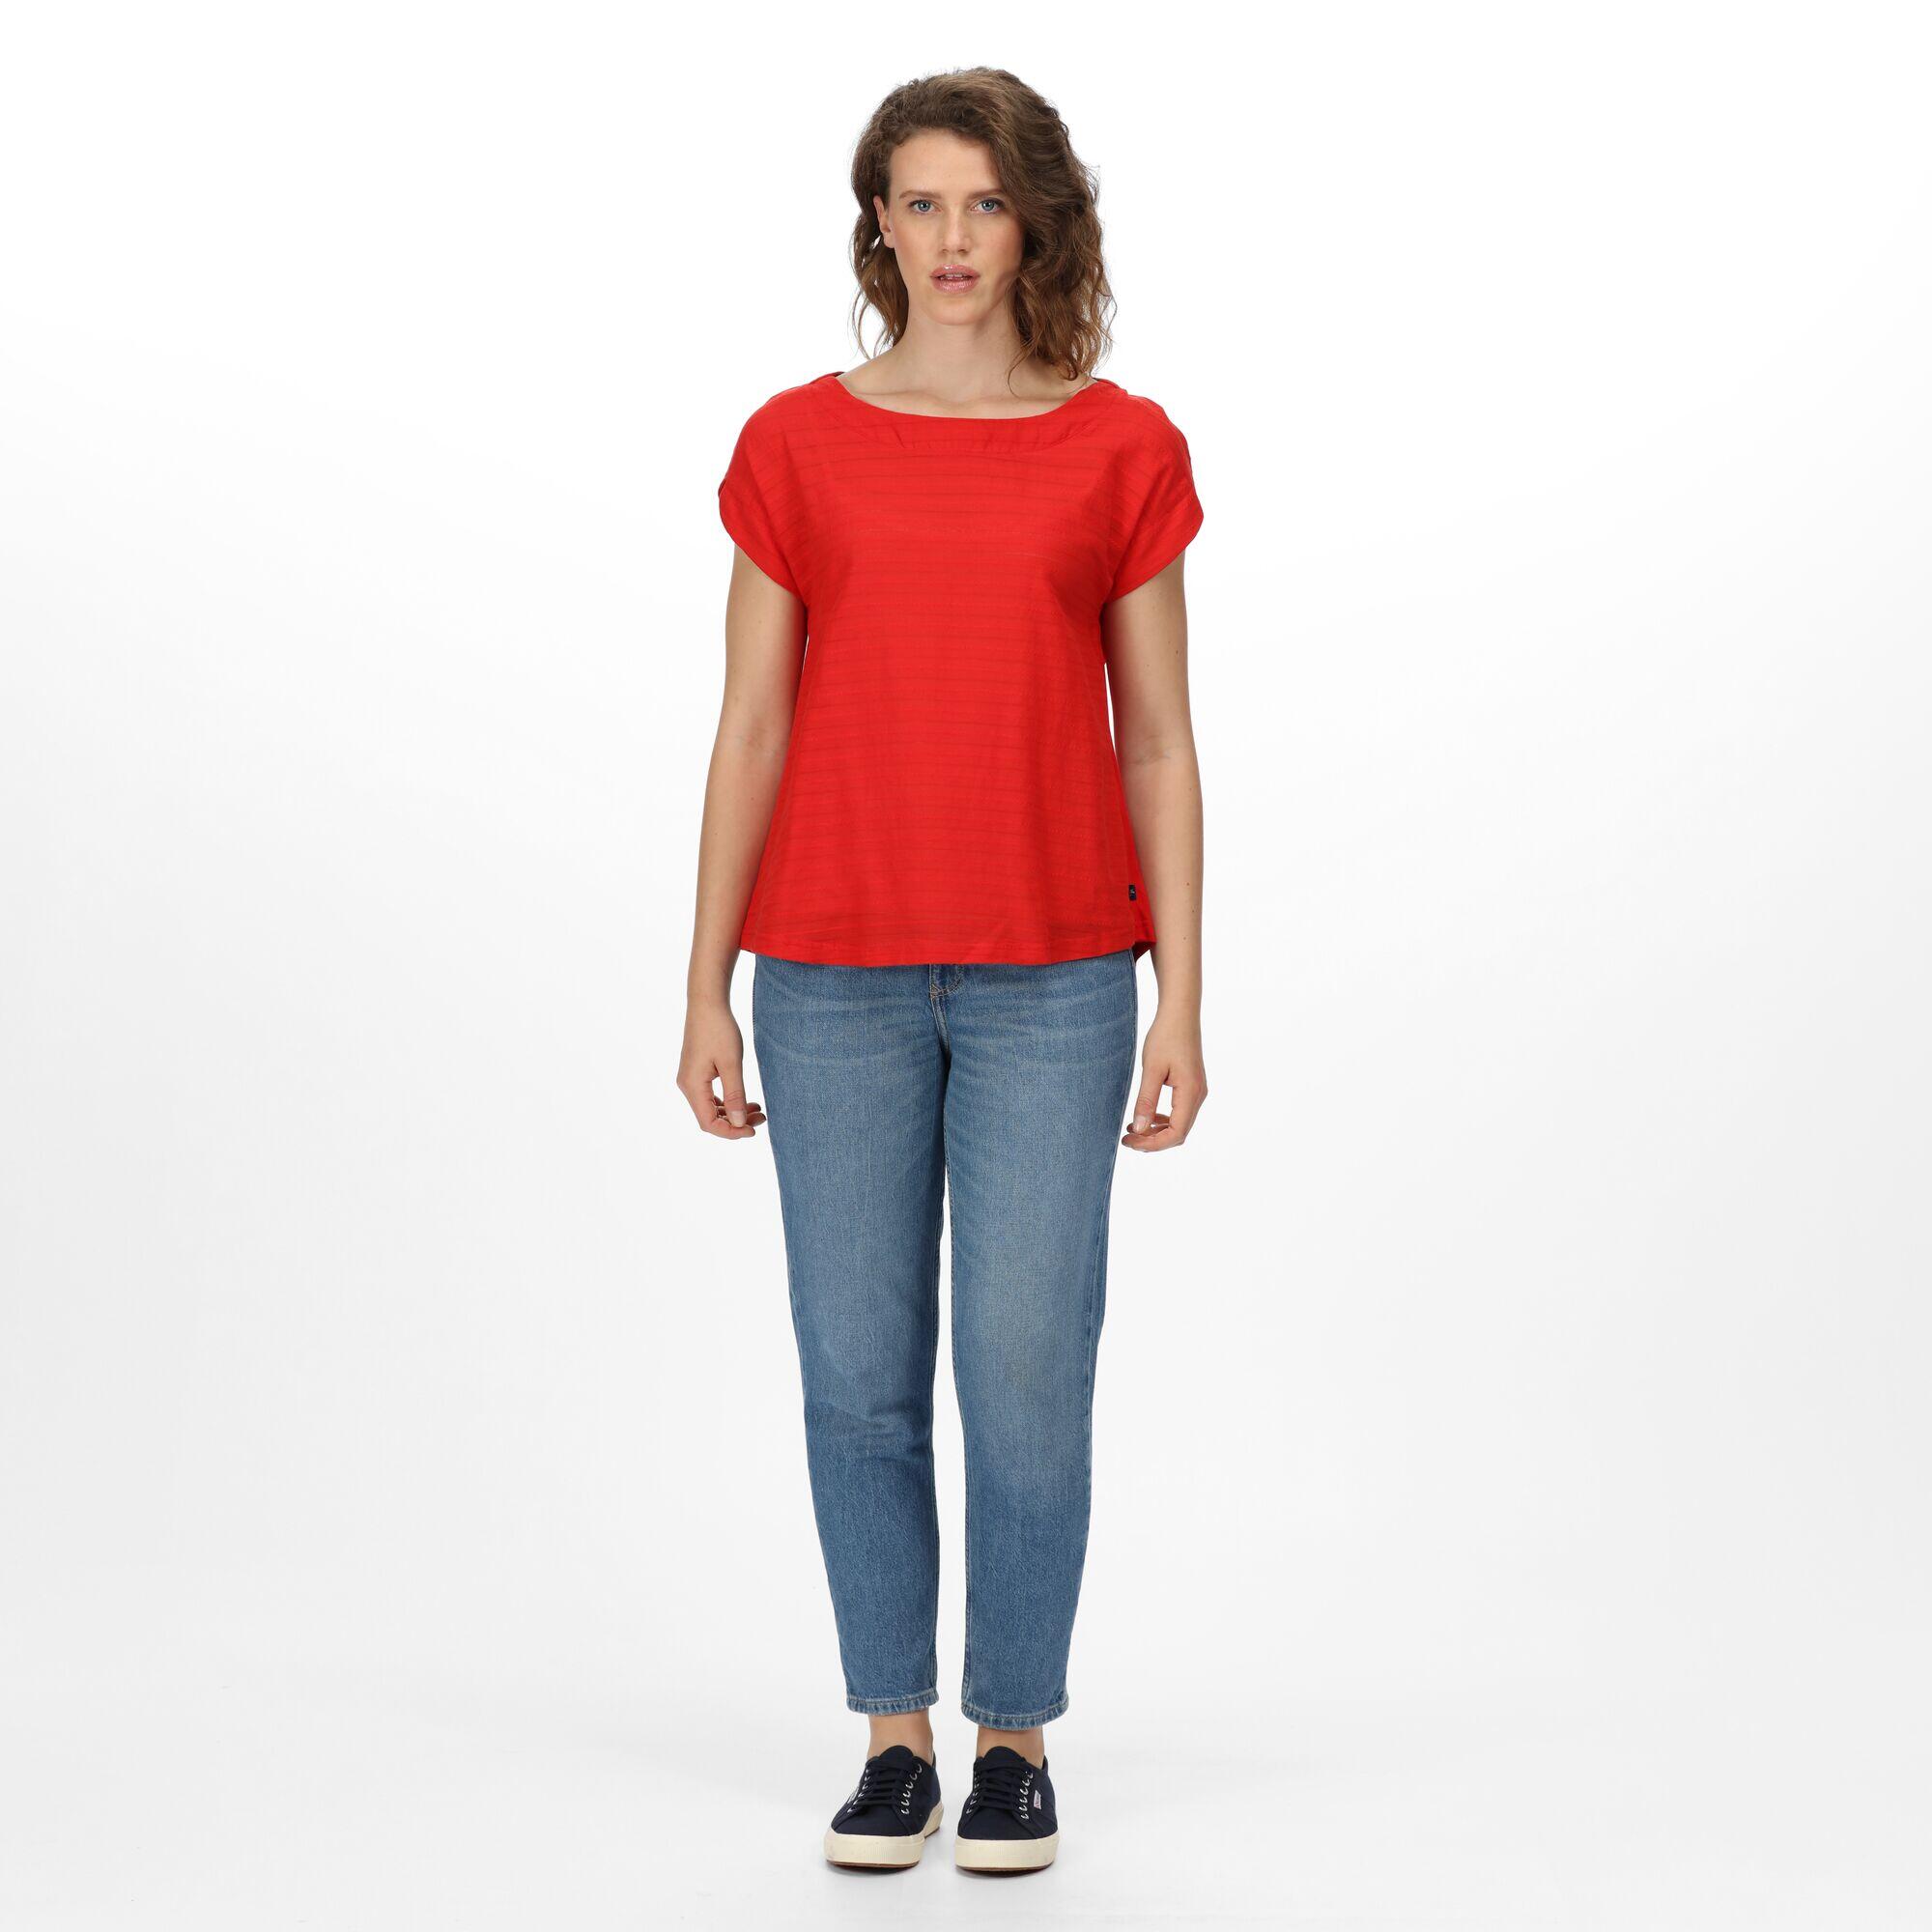 Adine Women's Walking Short Sleeve T-Shirt - True Red 3/5